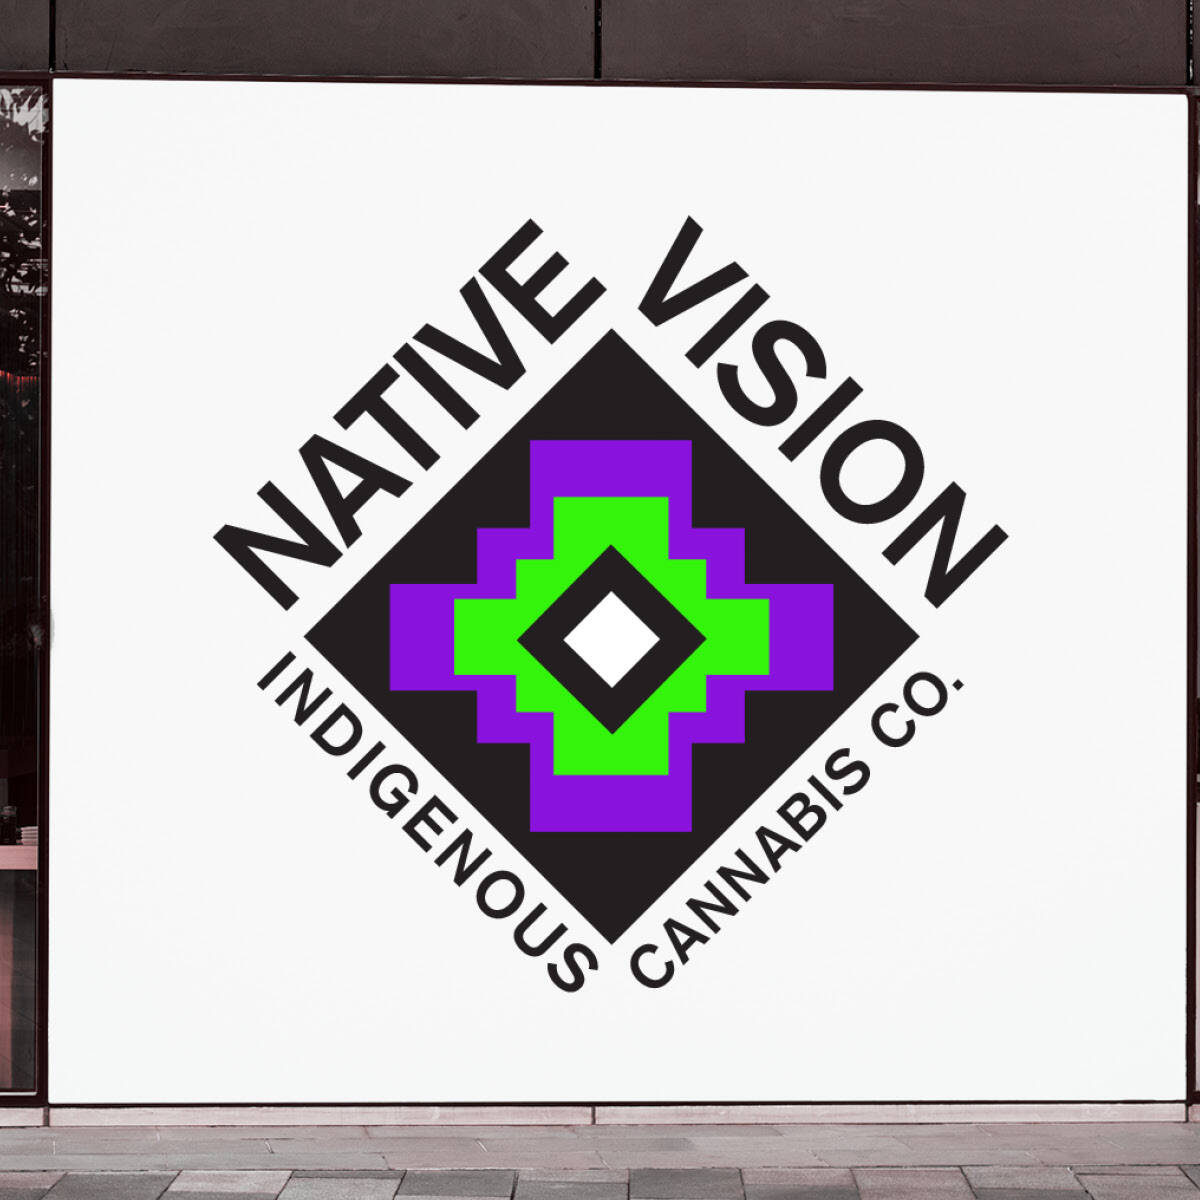 Native vision indienous cannabis dispensary modern logo design ft